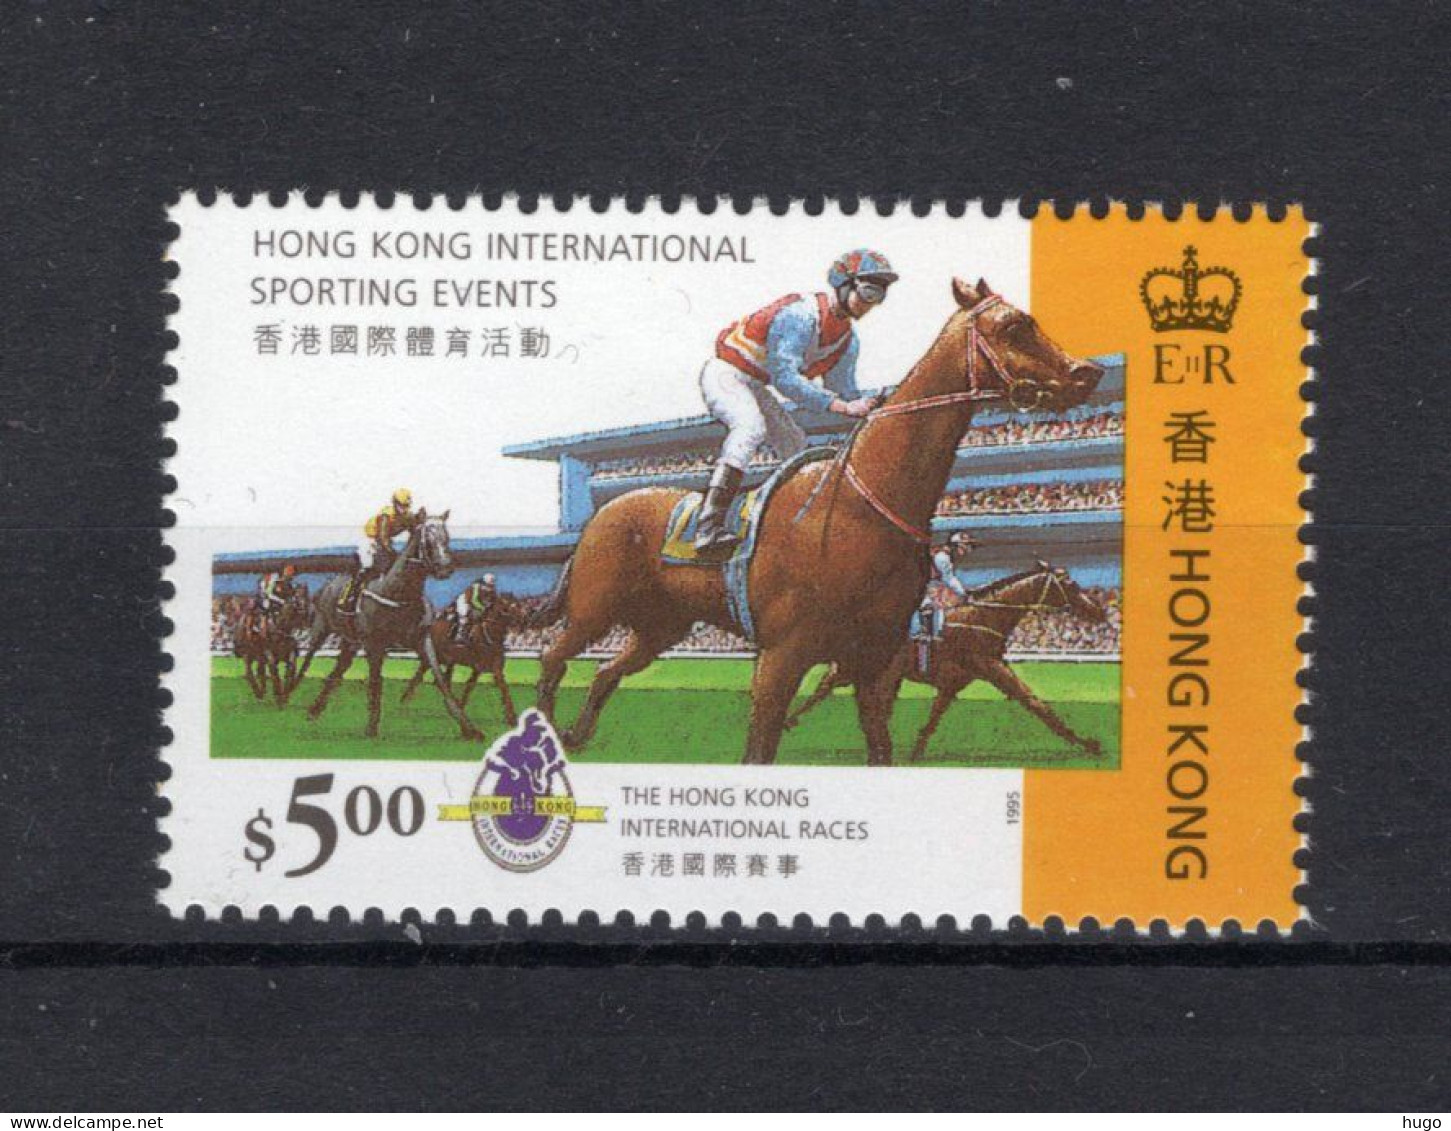 HONG KONG Yt. 765 MNH 1995 - Unused Stamps